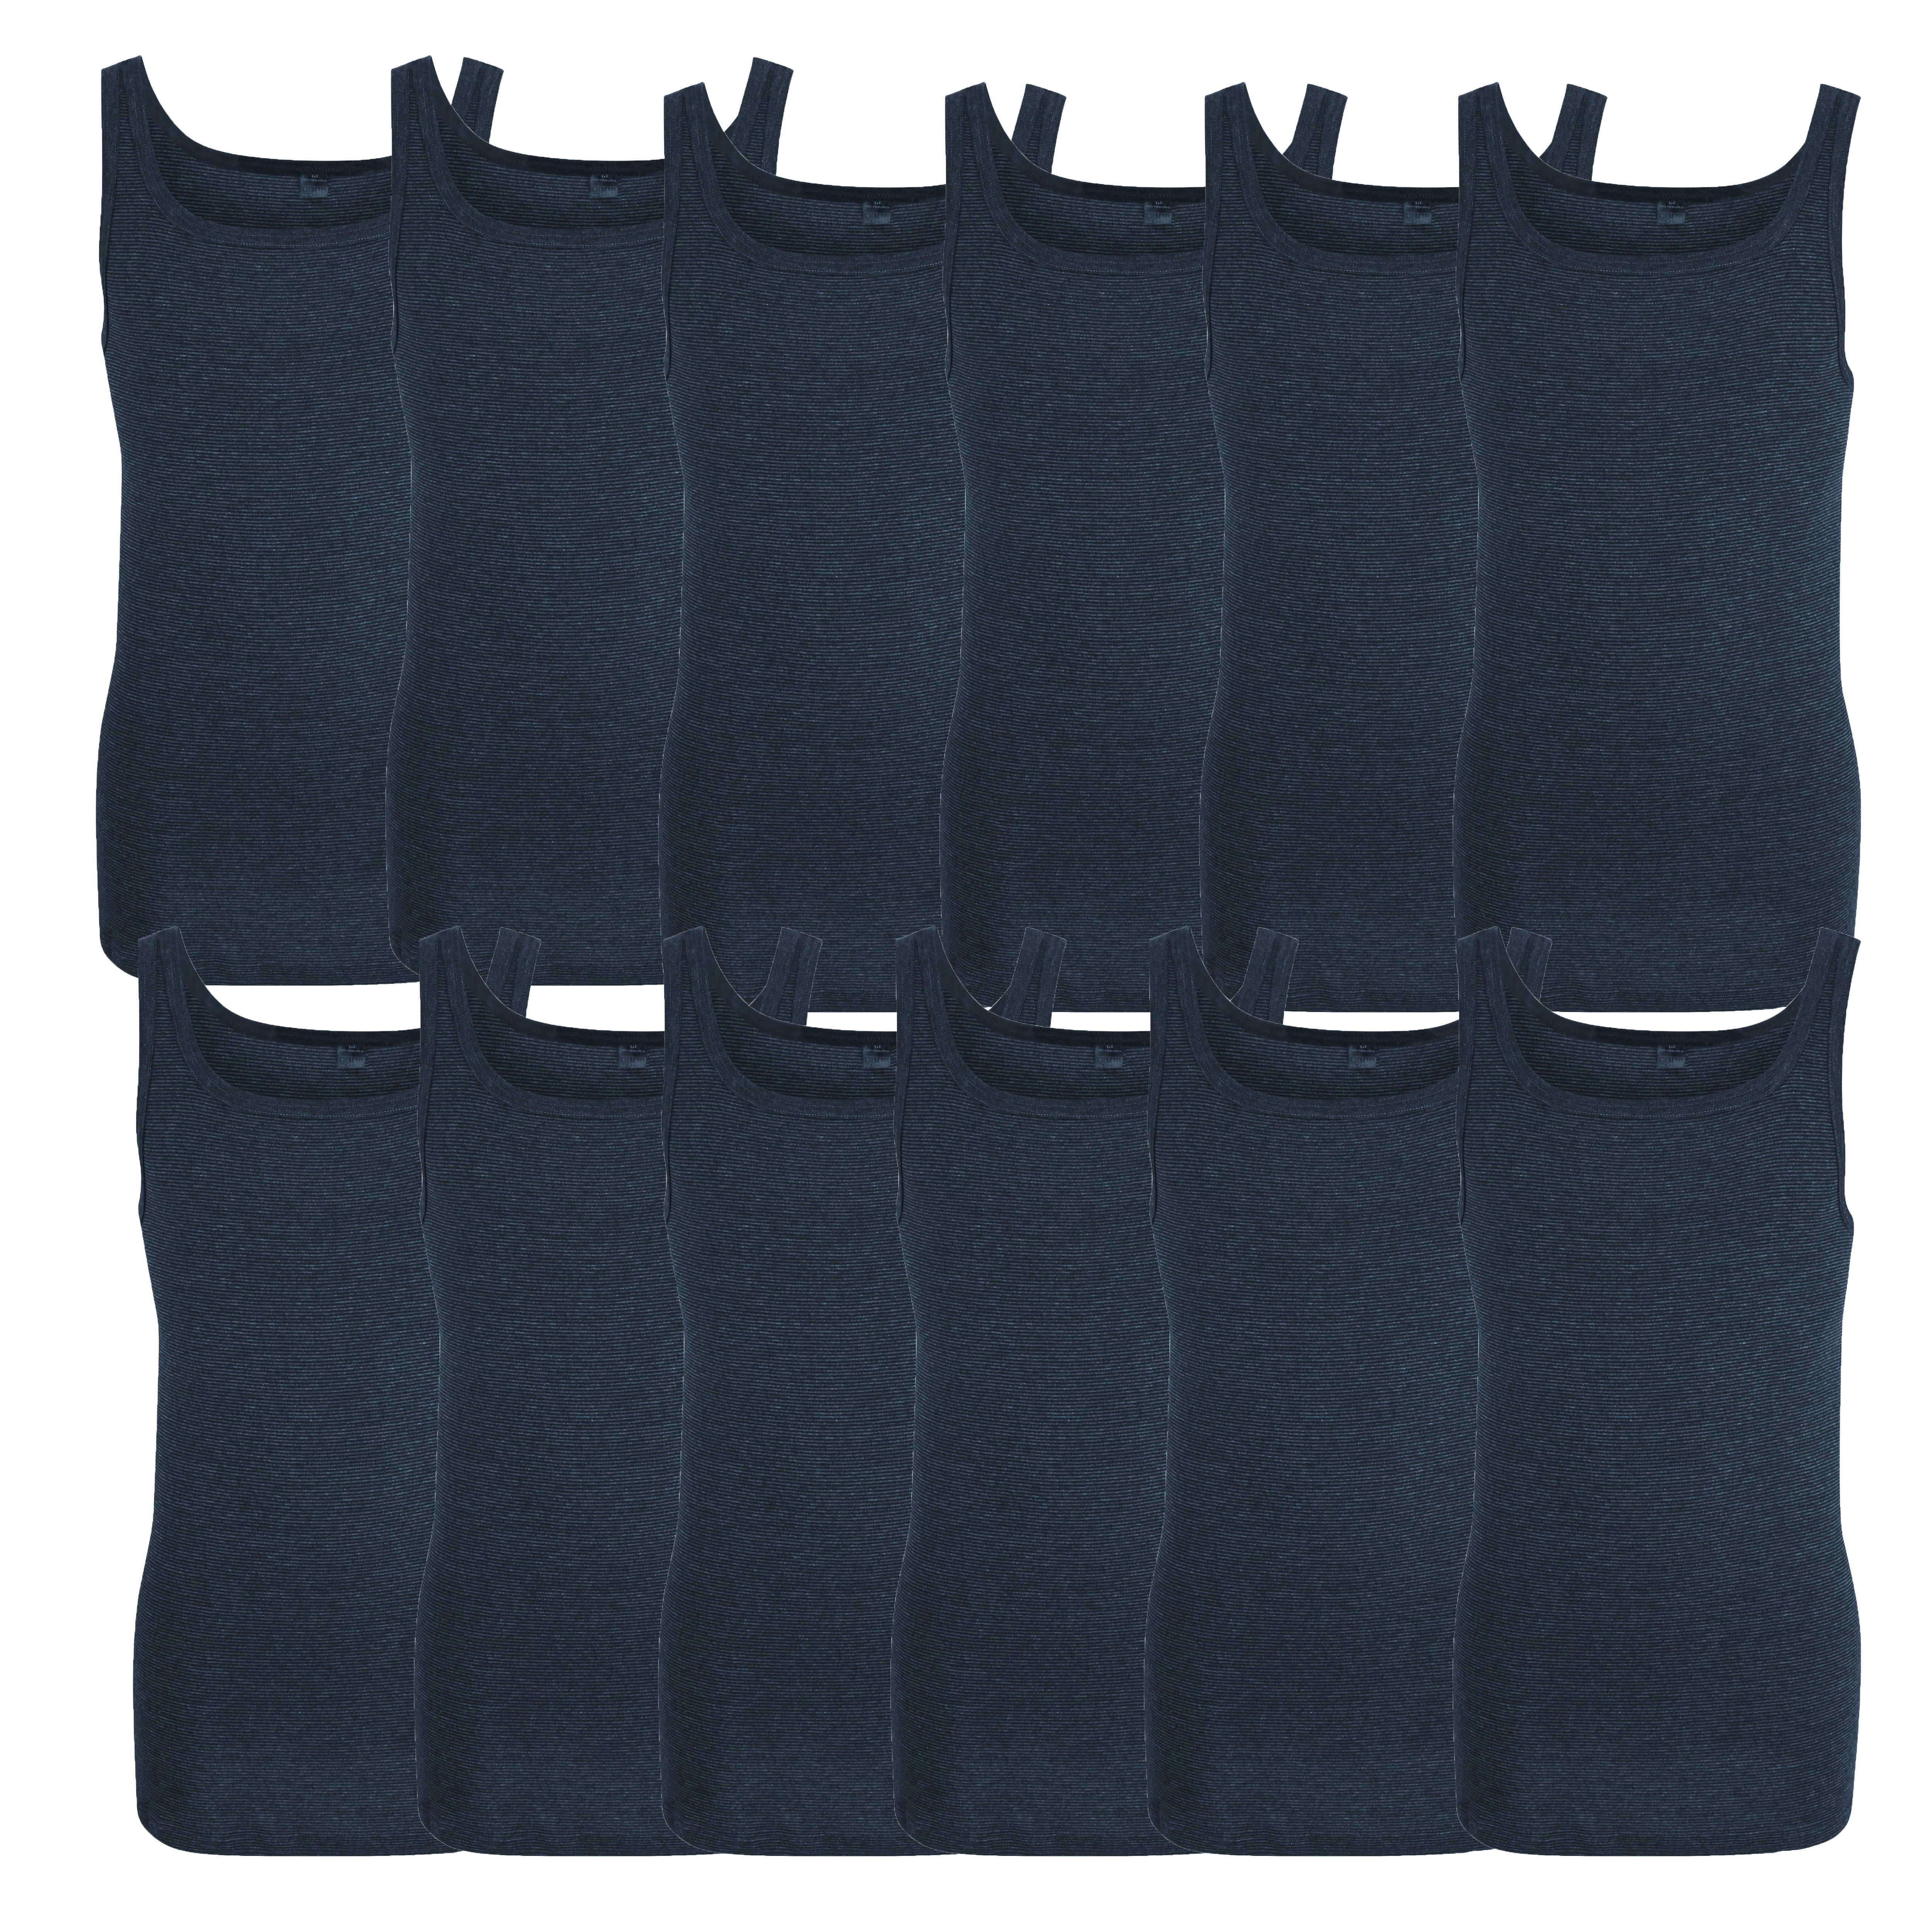 GÖTZBURG Unterhemd 12er Pack Herren Unterhemden (12-St., 12er Pack) Feinripp Qualität blau